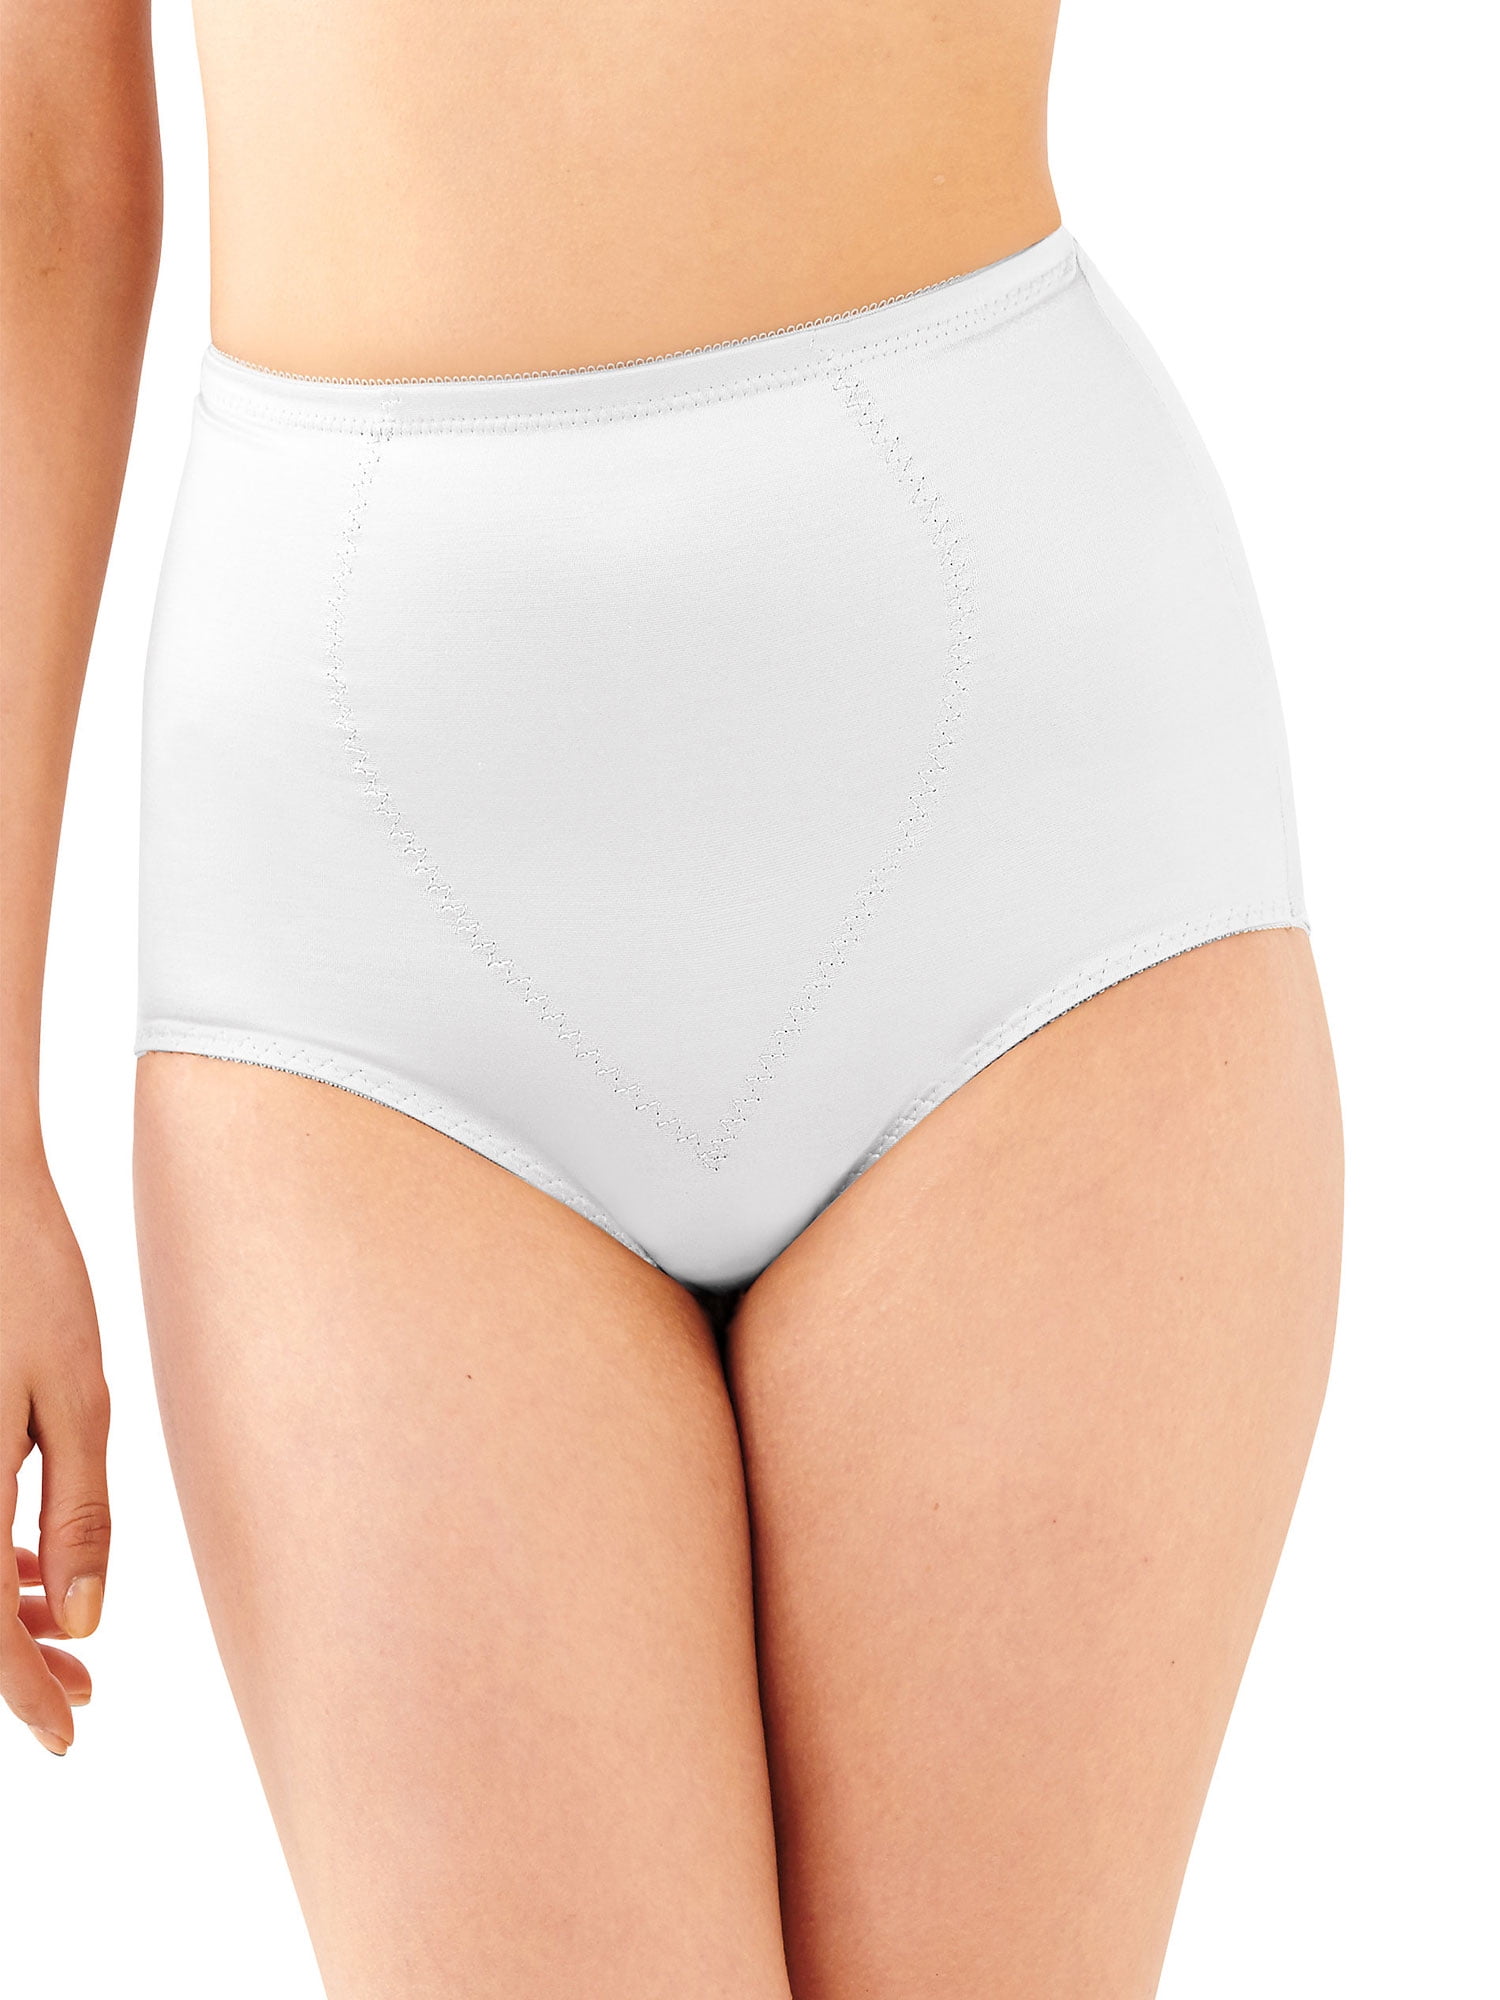 $24 Spanx Women's White Cotton Control Brief Panties Size S